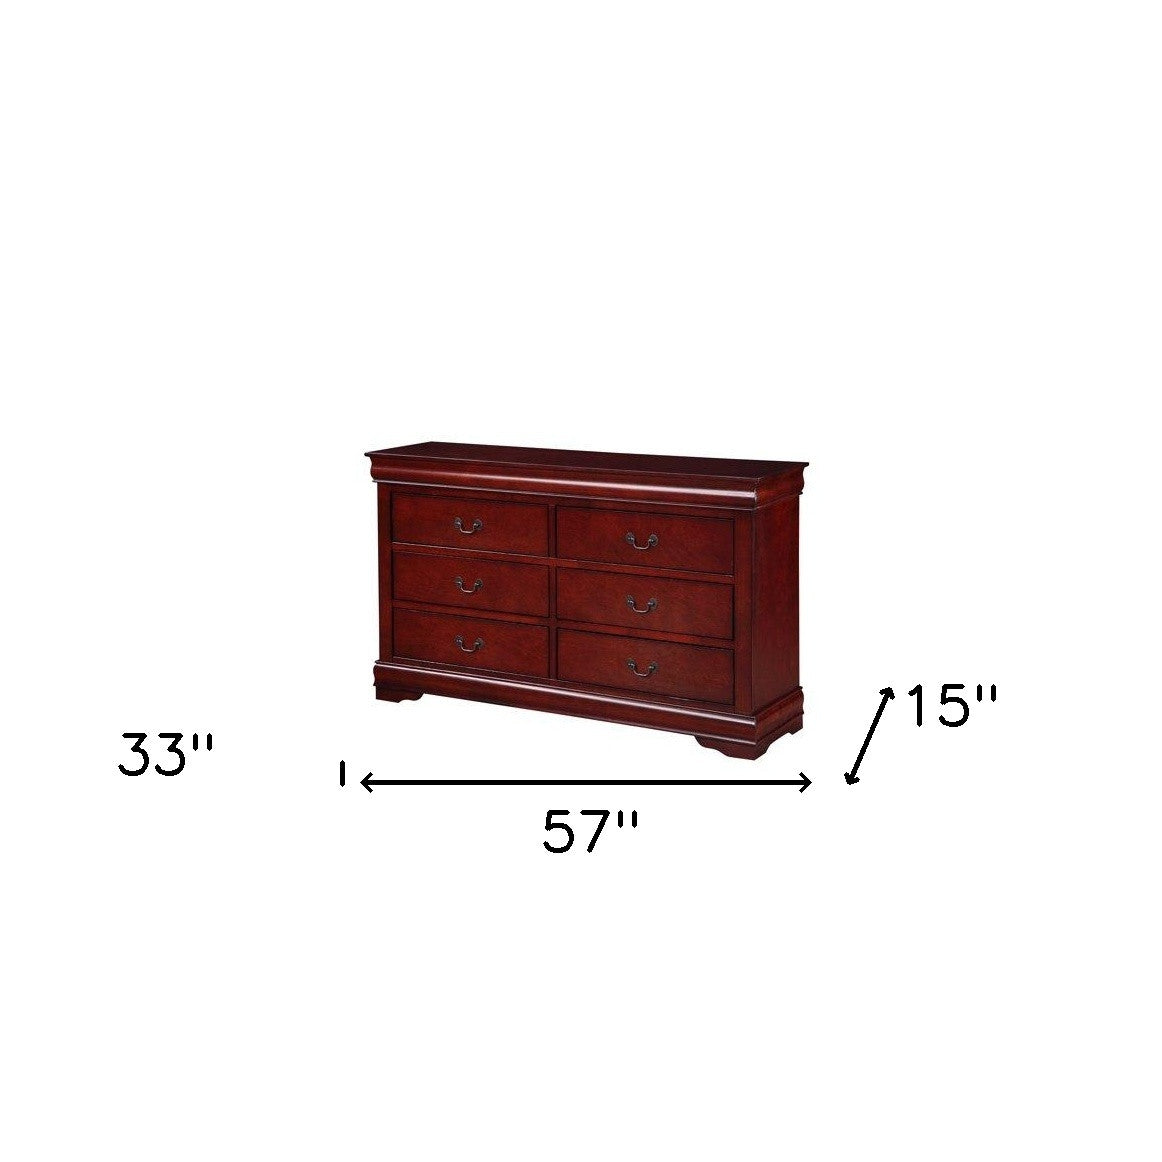 58" White Solid Wood Seven Drawer Triple Dresser